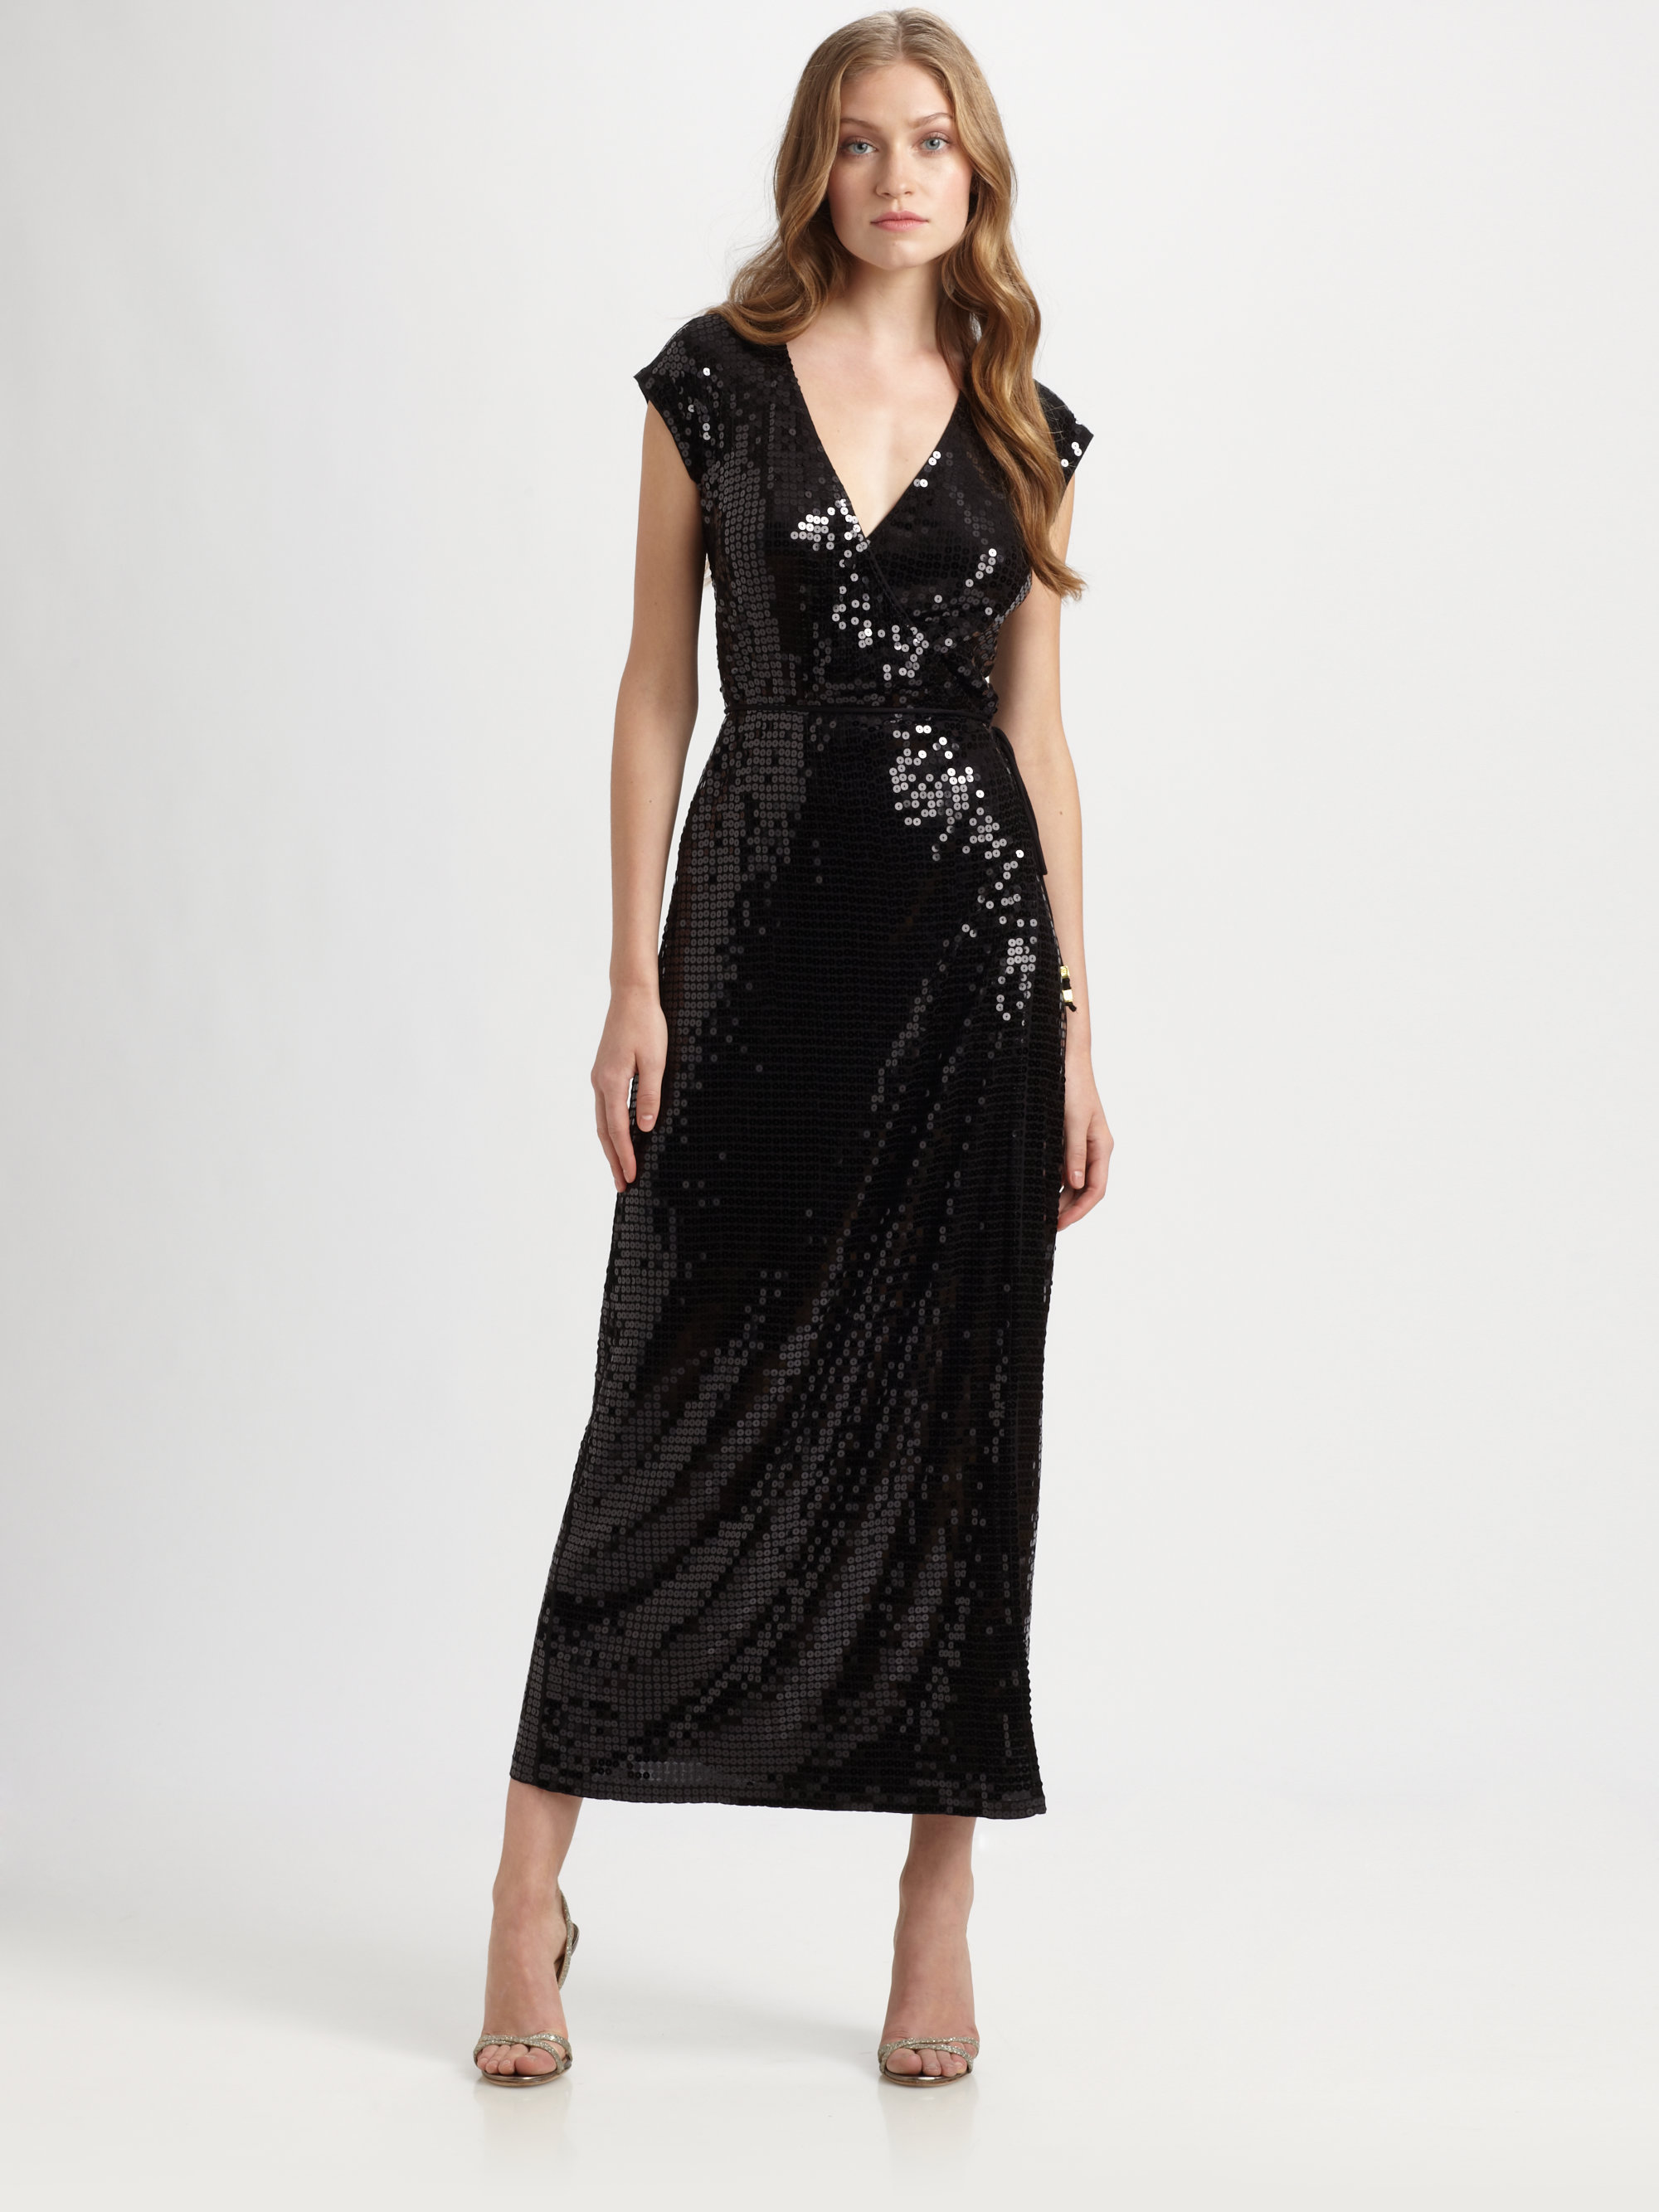 Michael Kors Black Sequin Dress Hot Sale, UP TO 53% OFF |  www.realliganaval.com